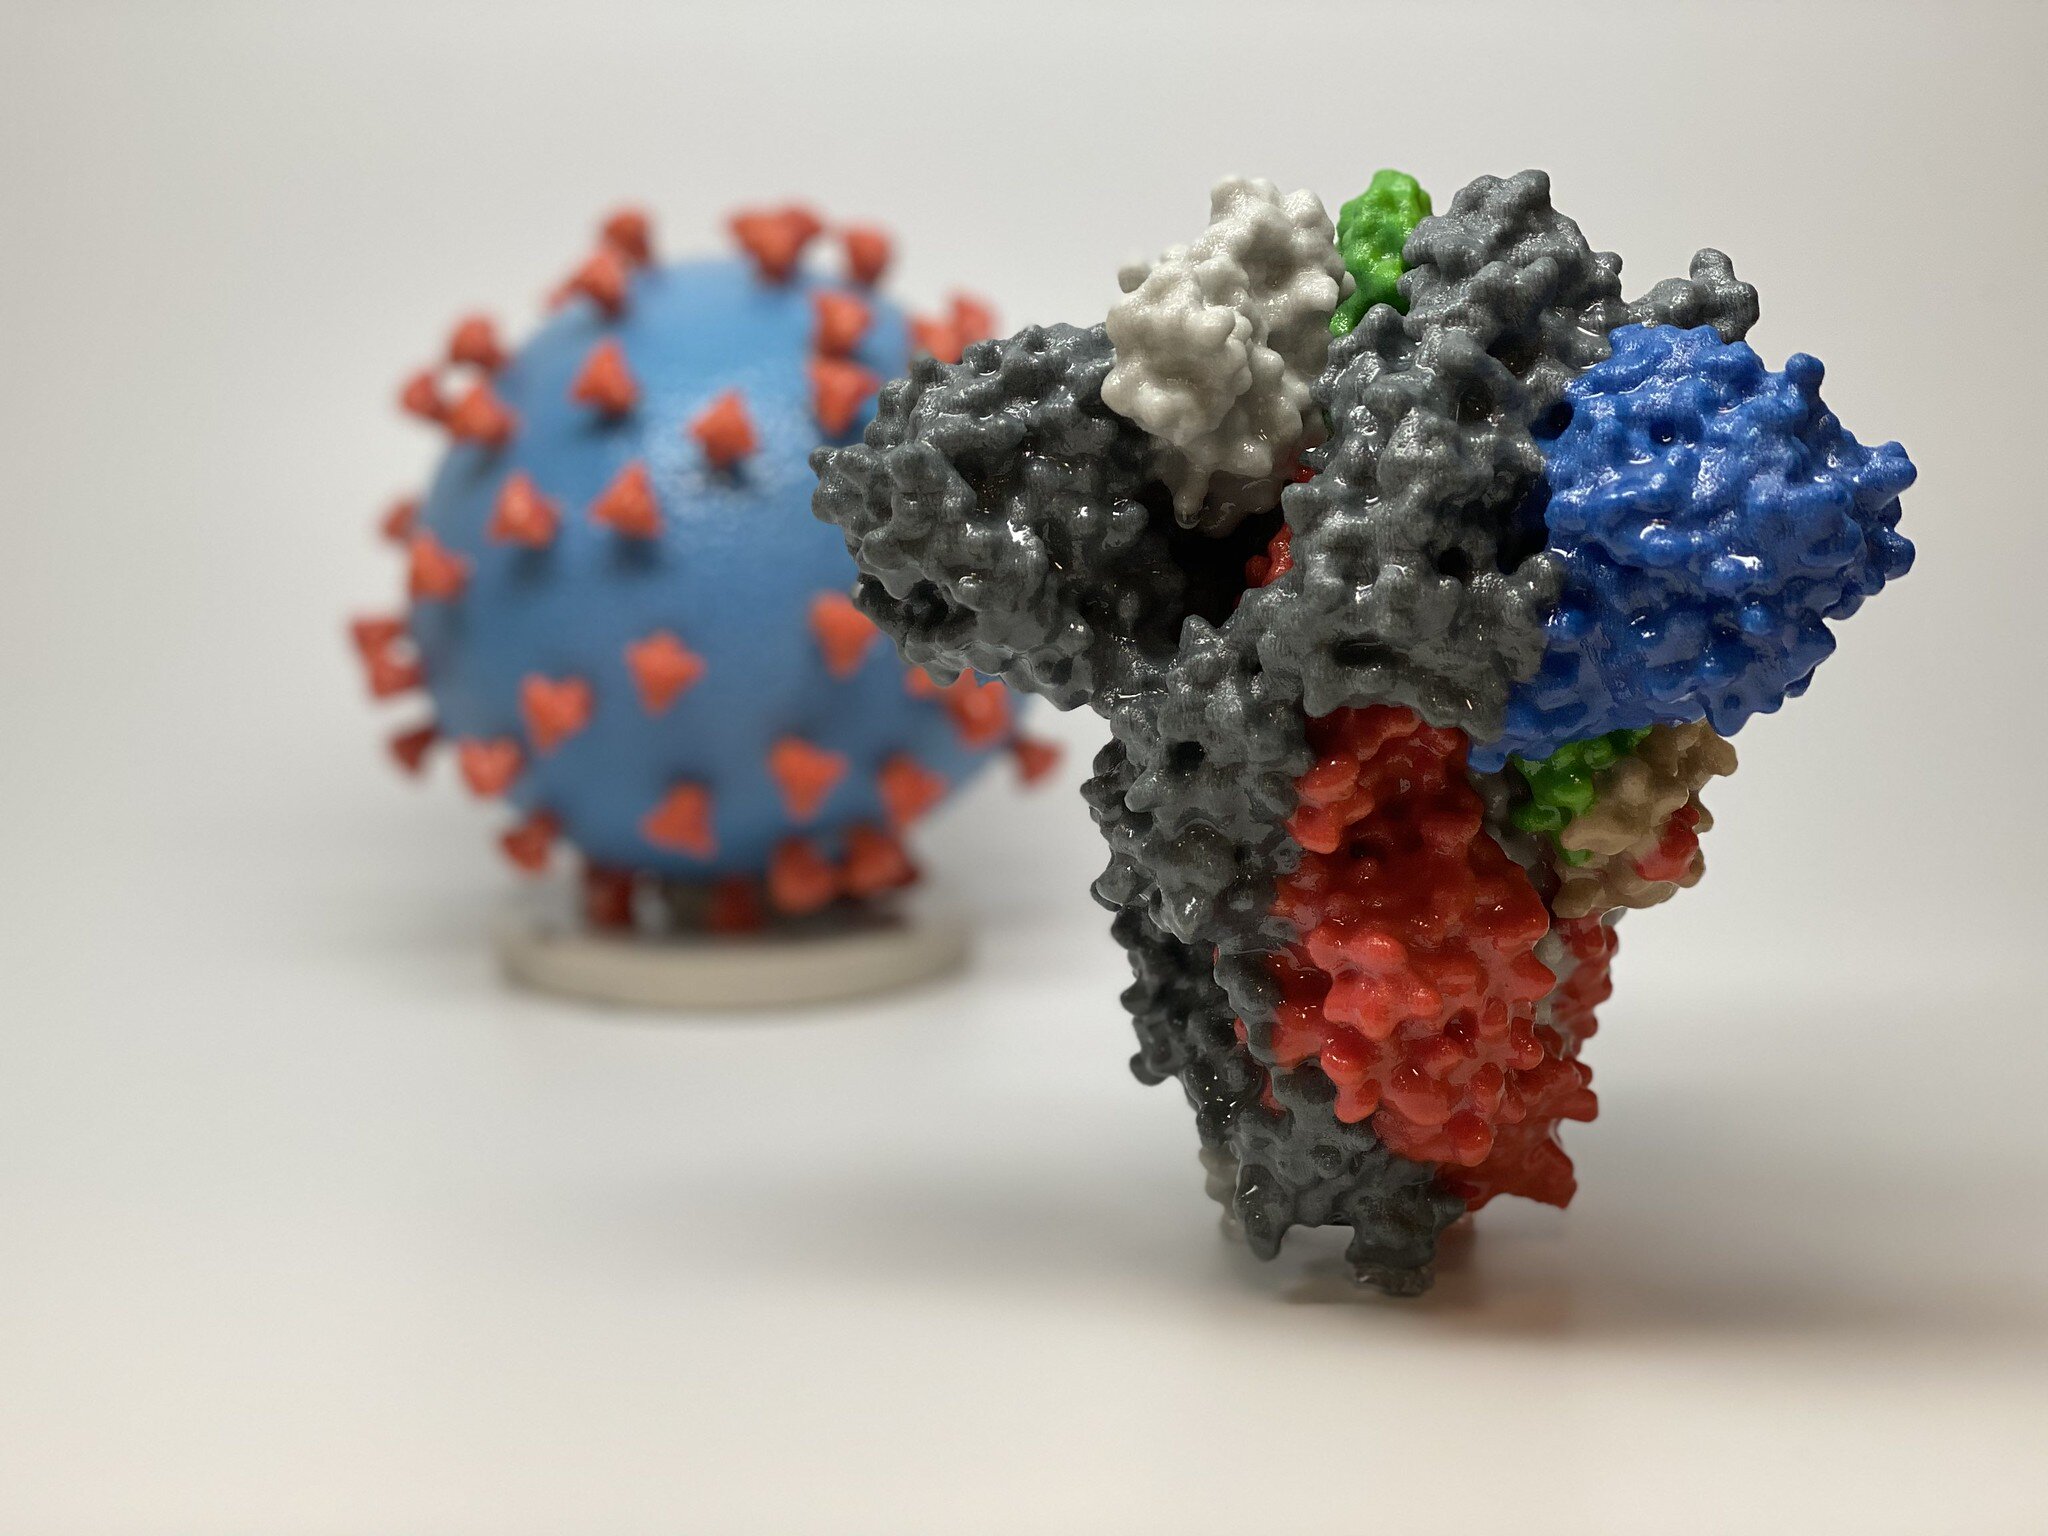 Shared antibodies may push COVID variants: study